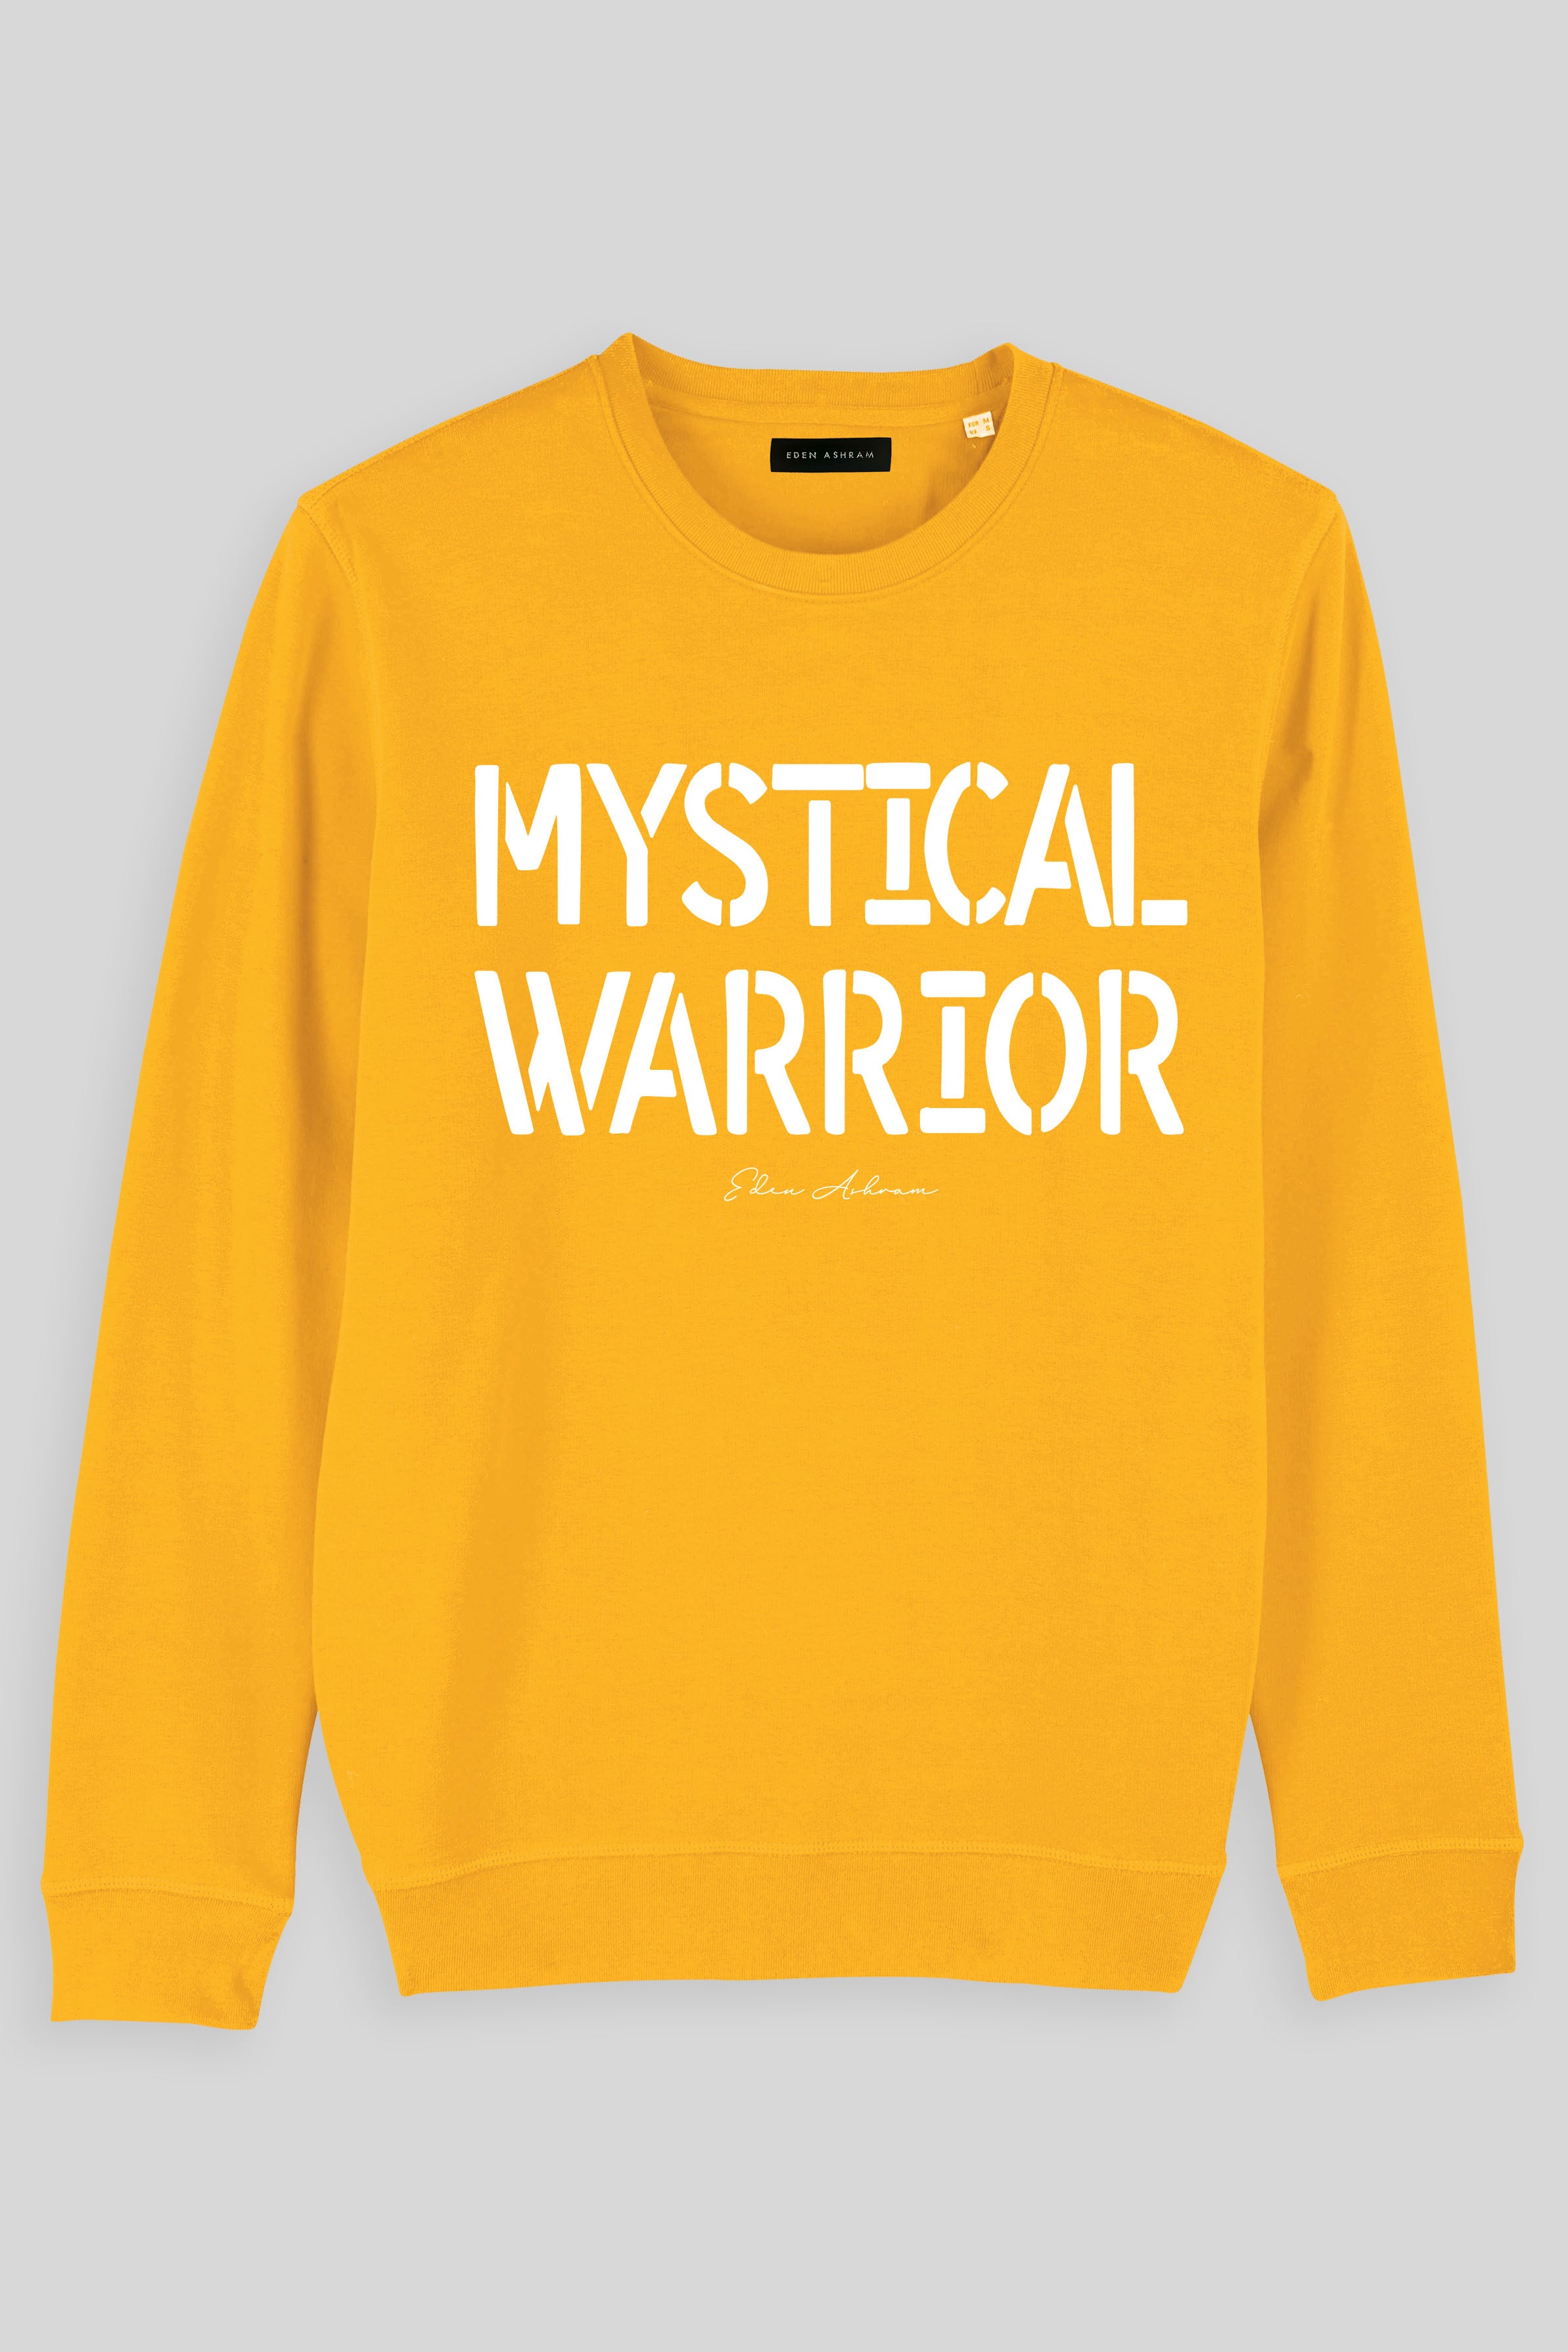 Eden Ashram Mystical Warrior Premium Crew Neck Sweatshirt Spectra Yellow